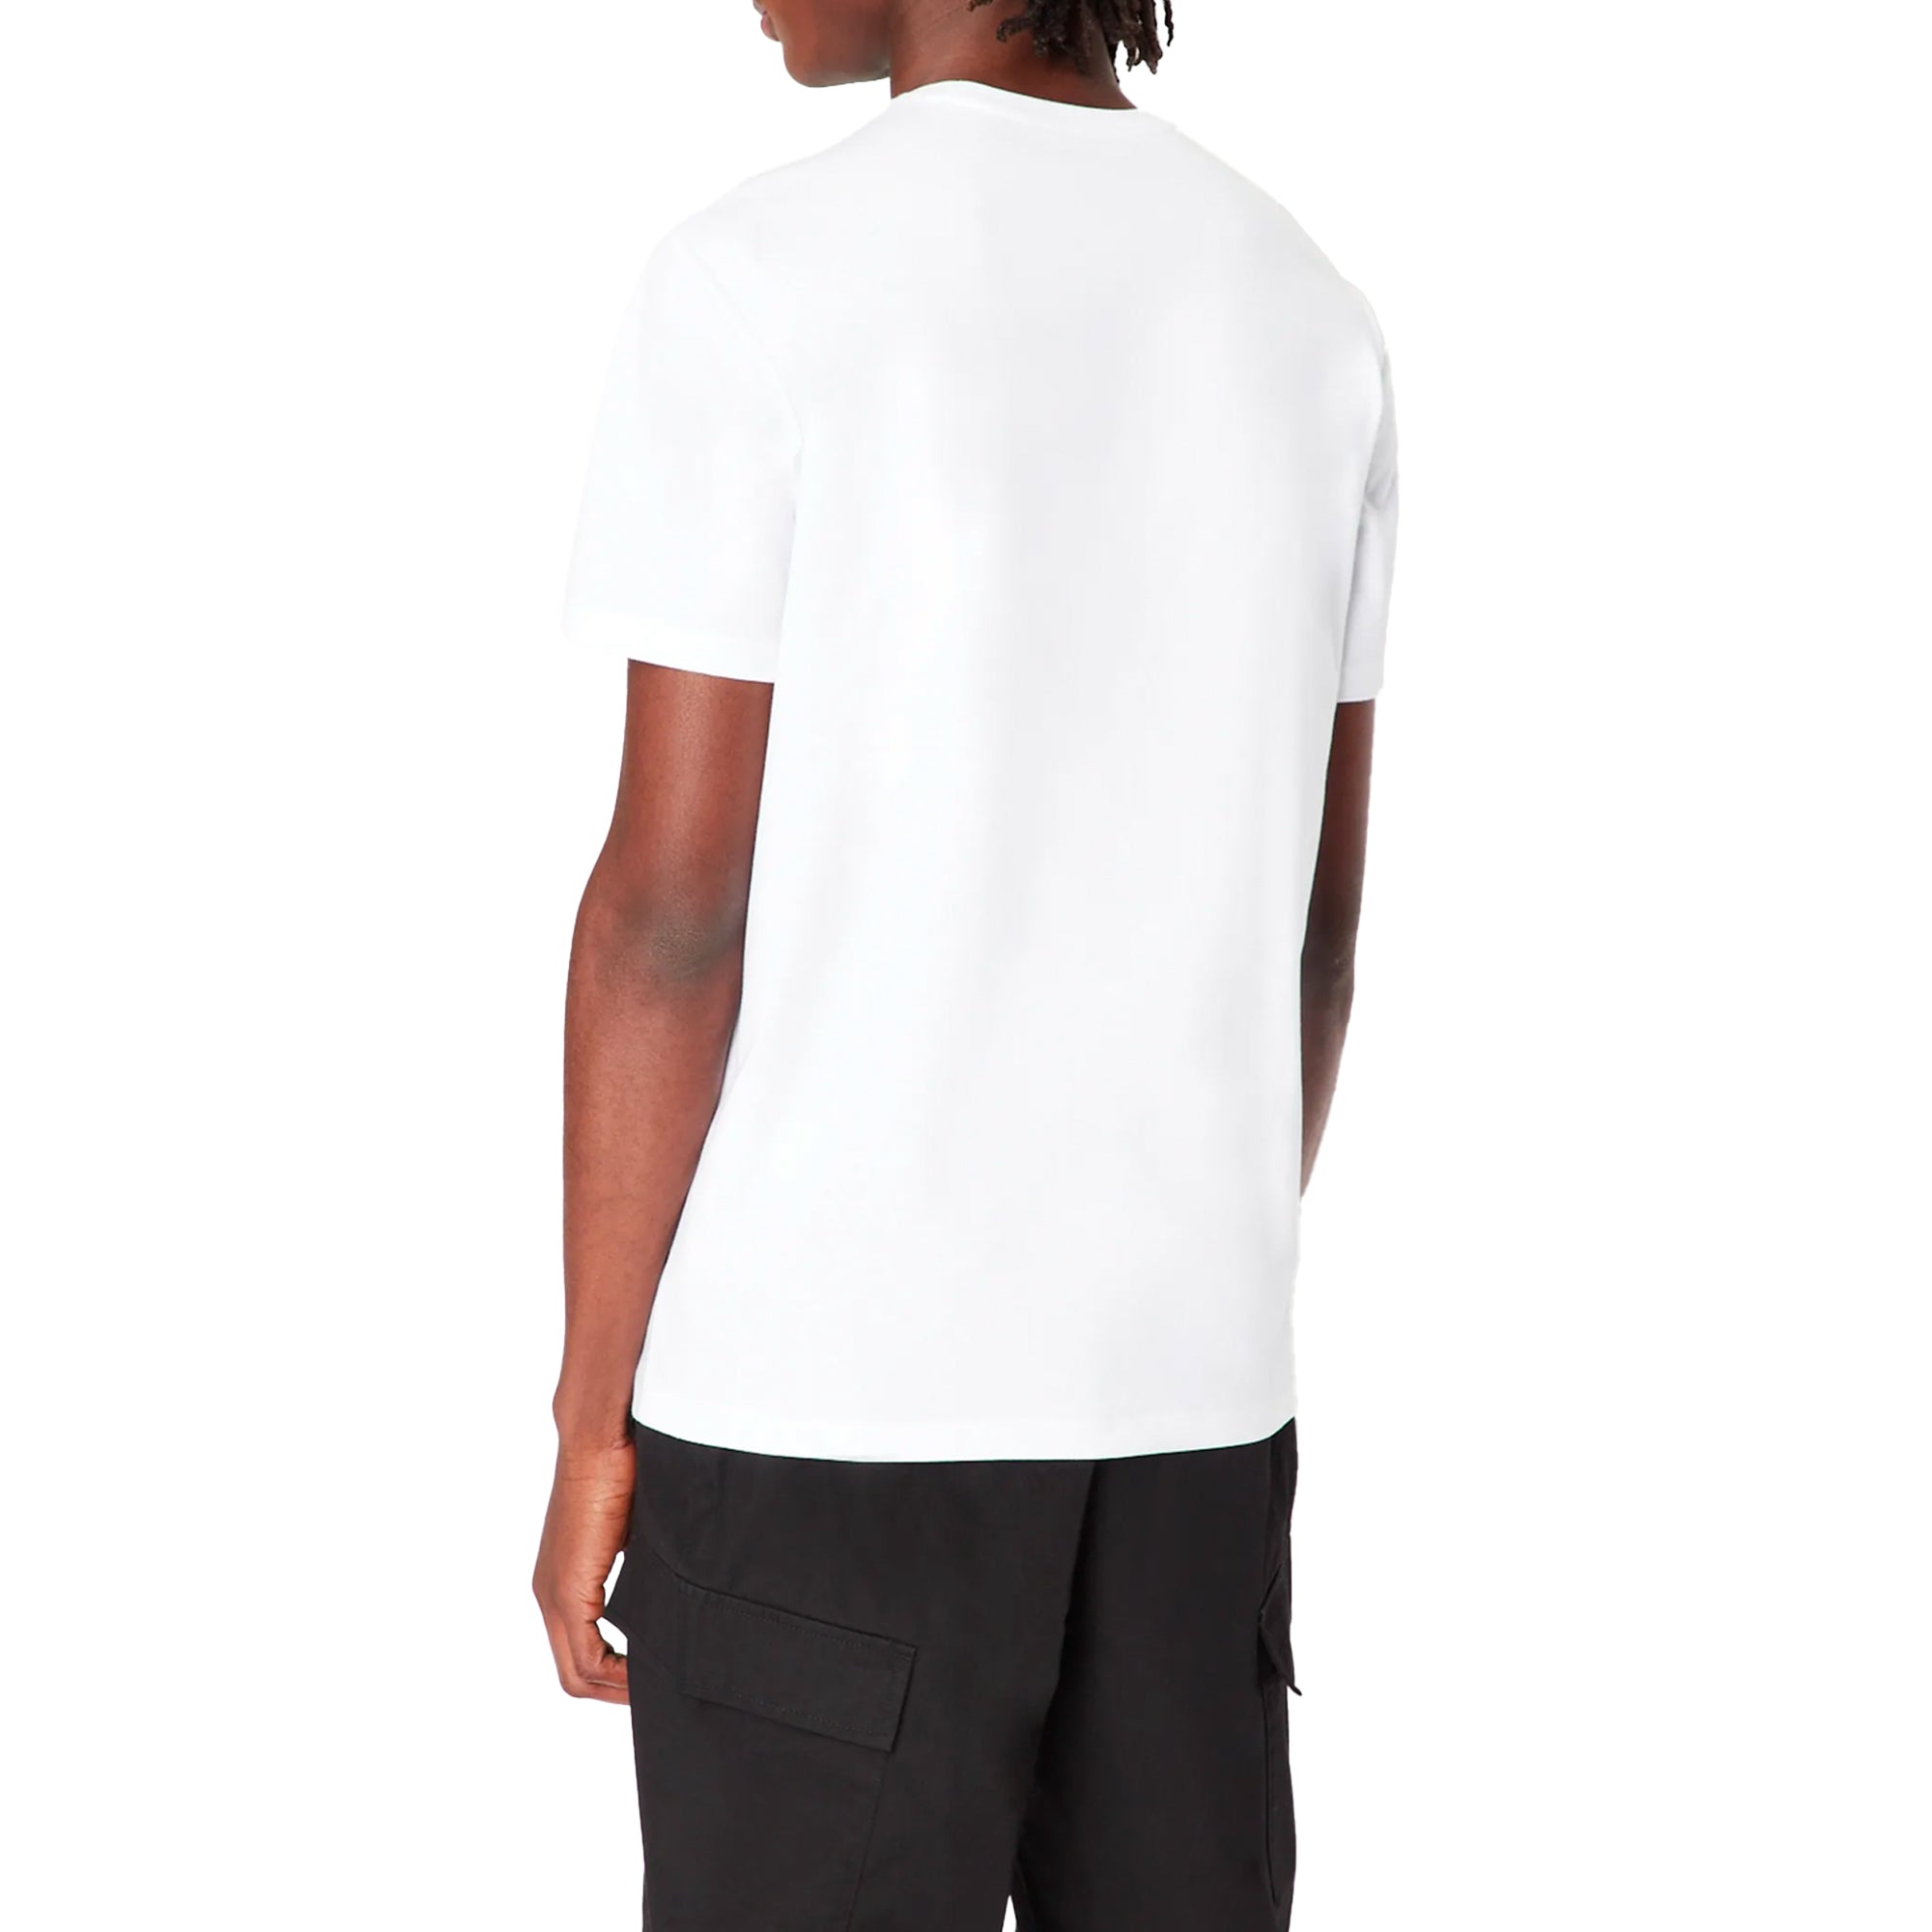 Armani Exchange 3RZTHA AX Block T-Shirt - Tropical Print